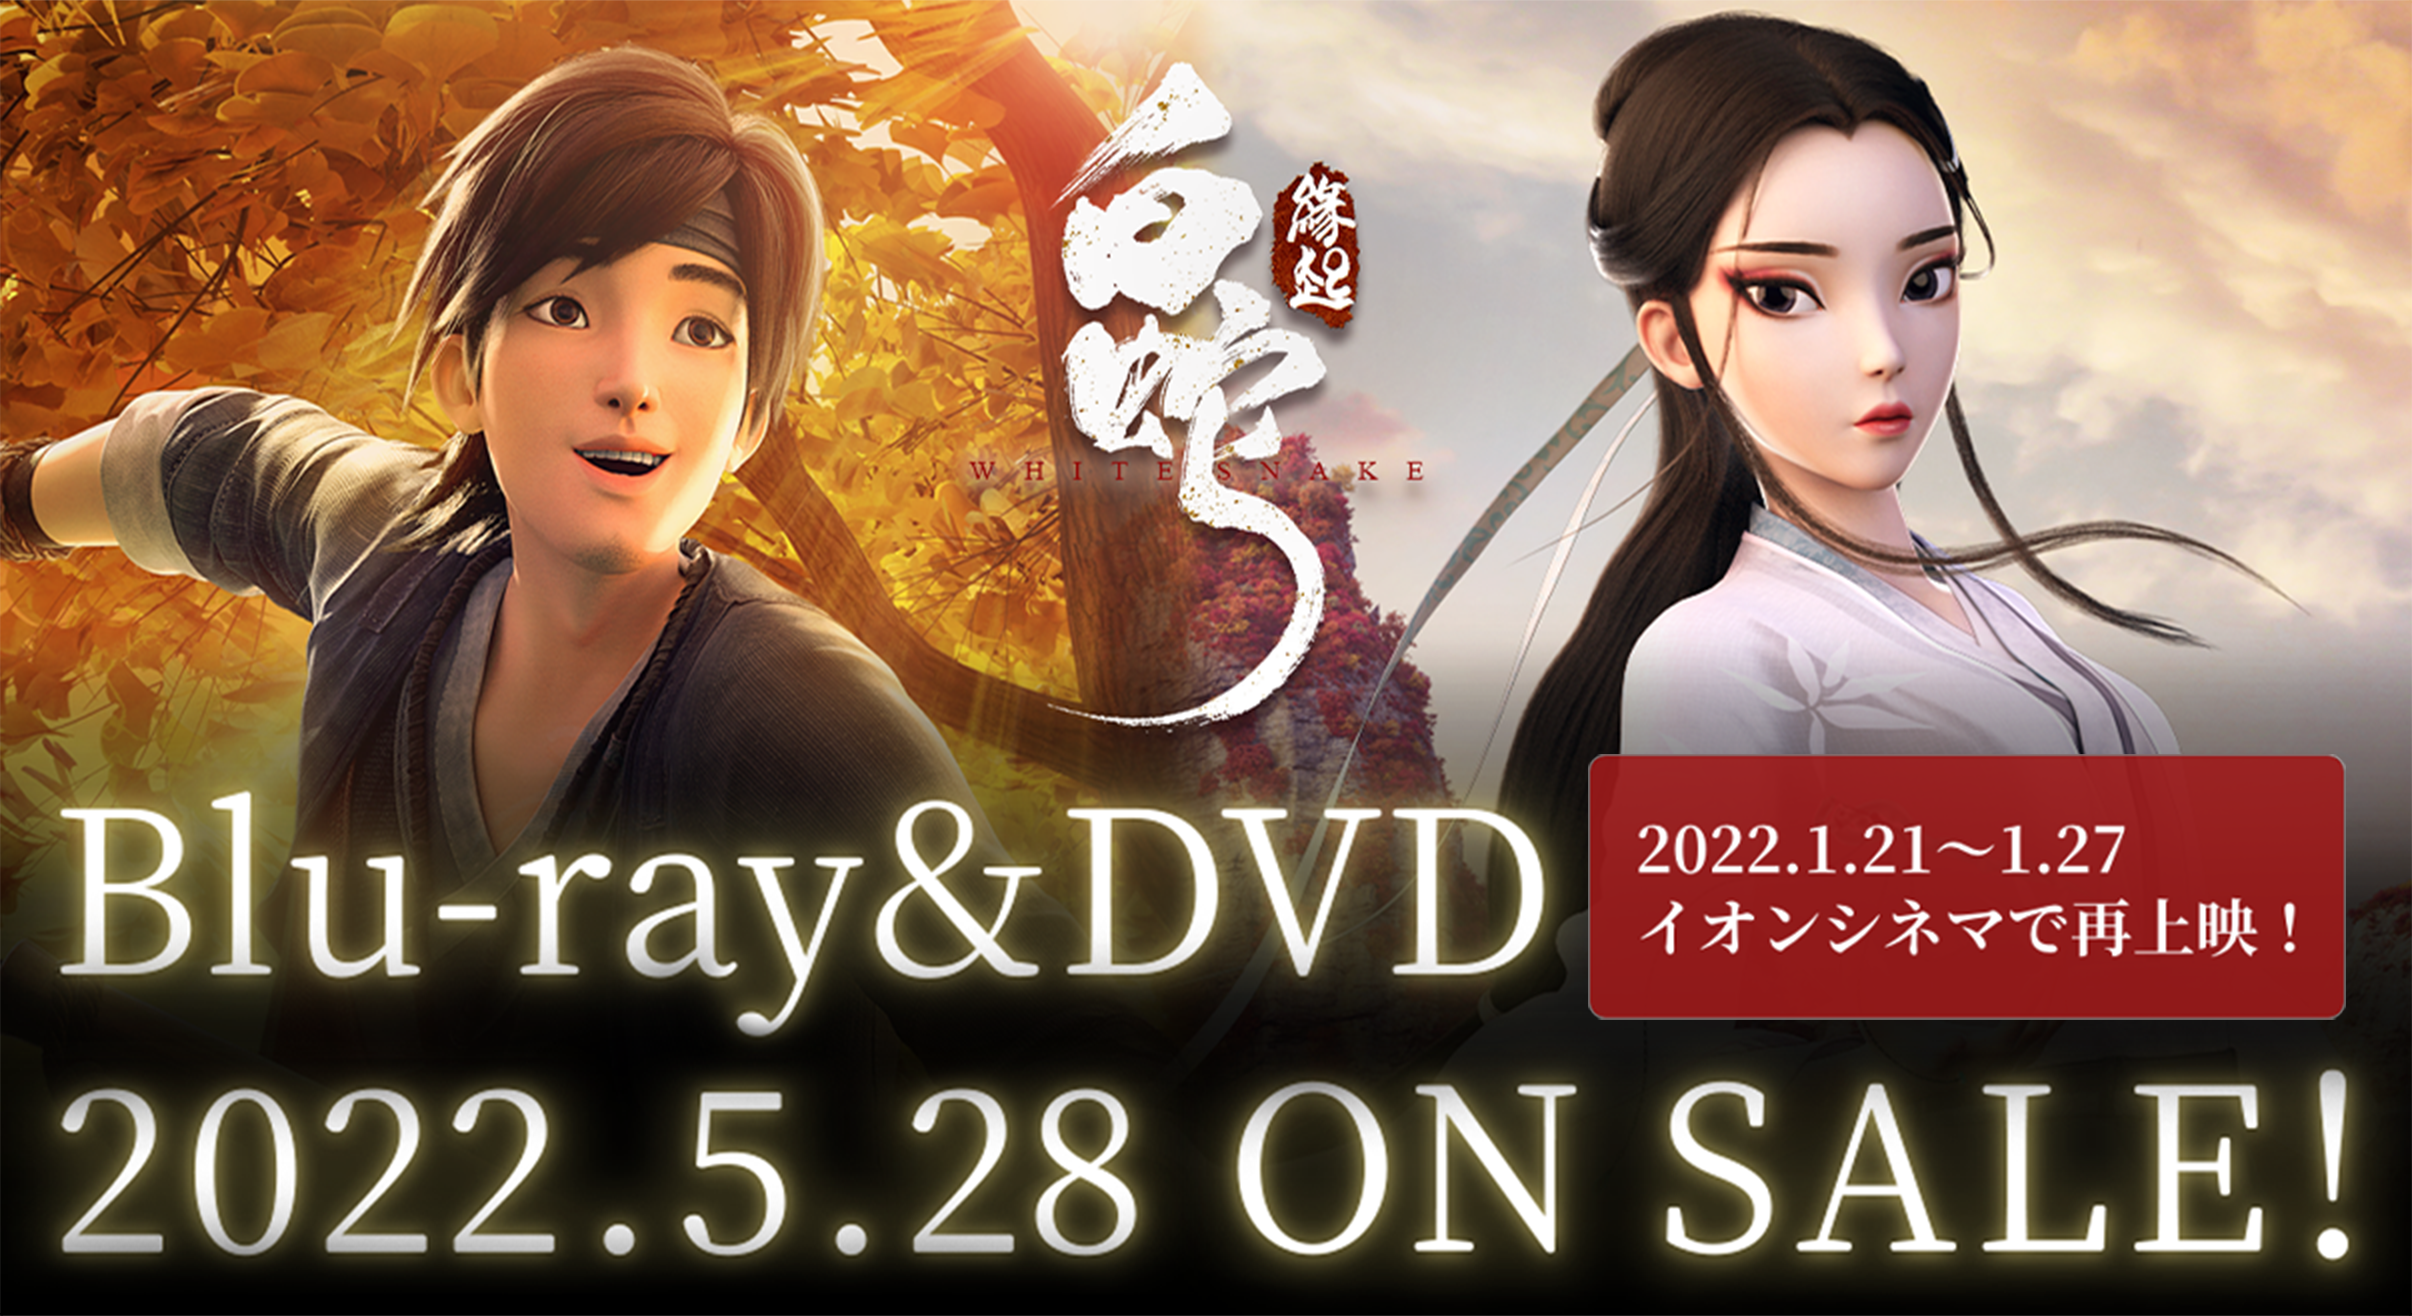 Blu-Ray＆DVD2022.5.28 ON SALE!